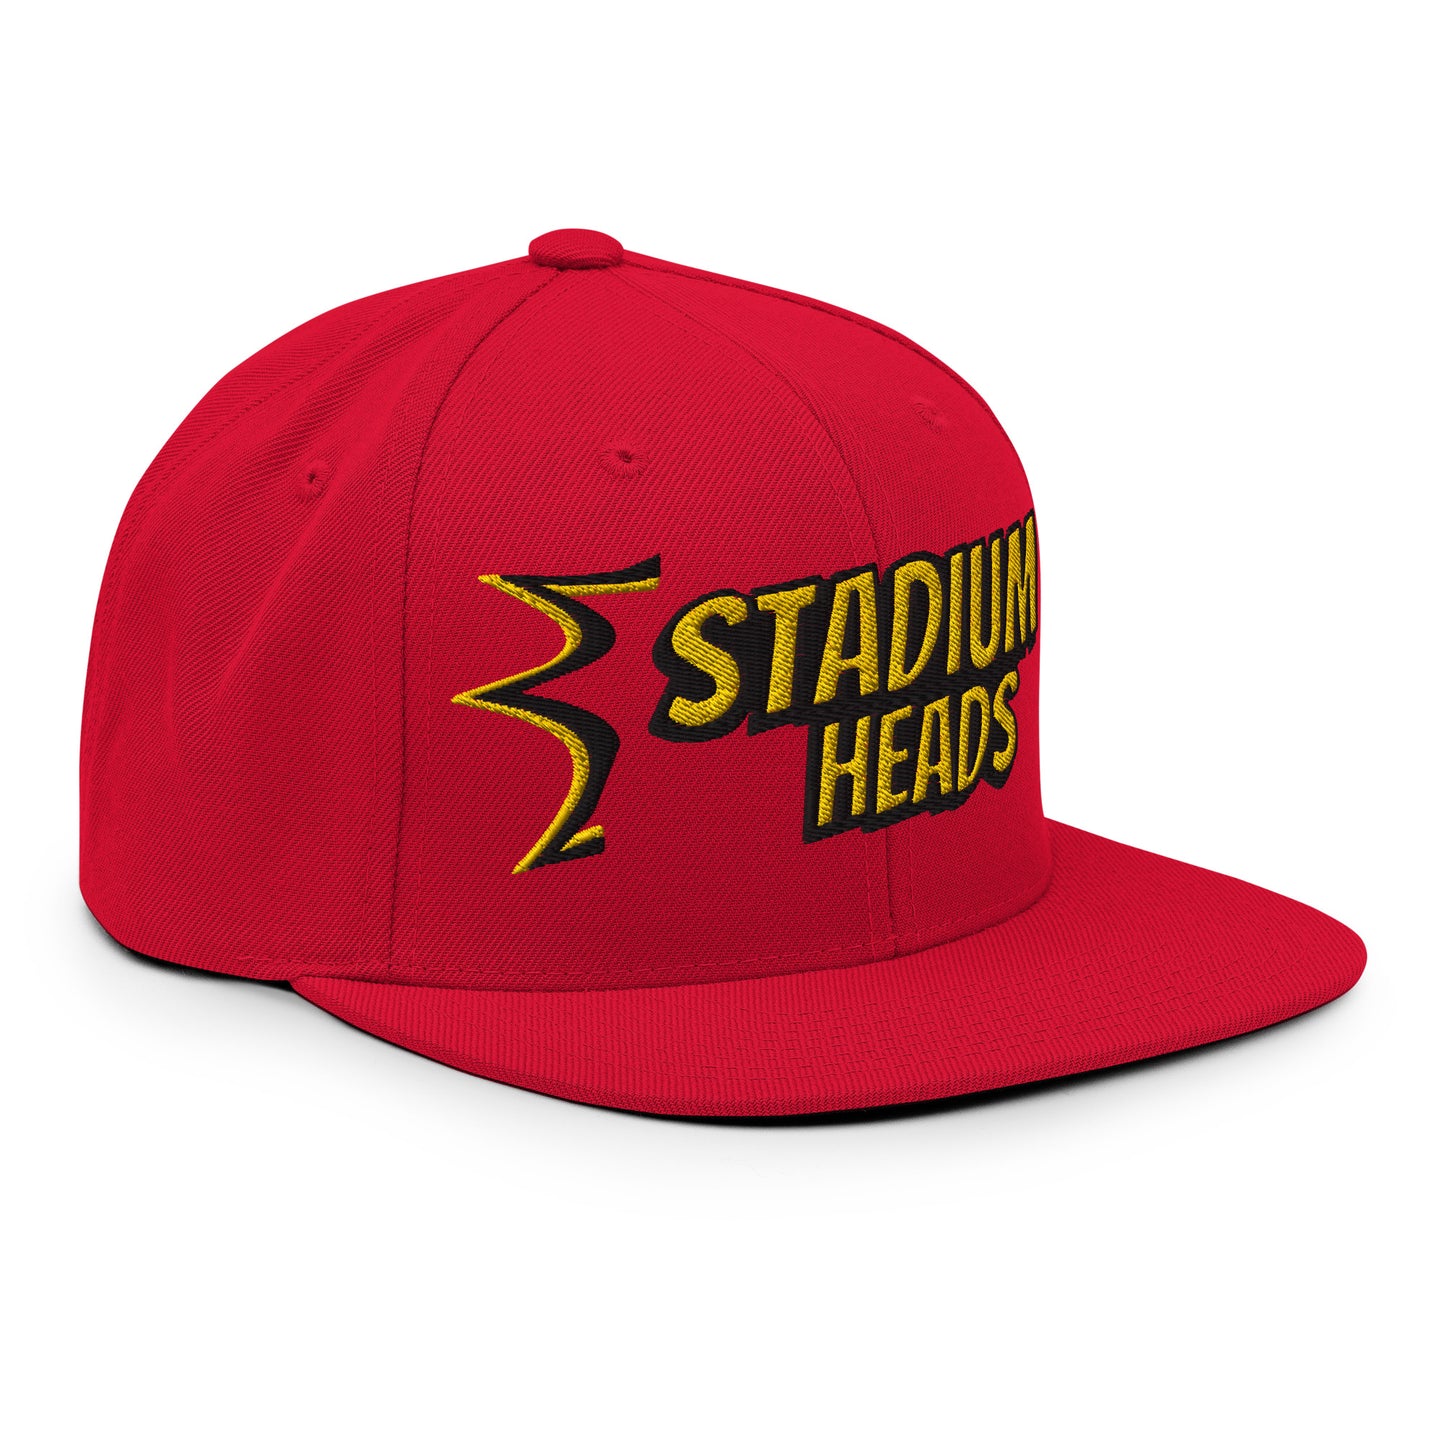 Stadium Heads - Snapback Hat